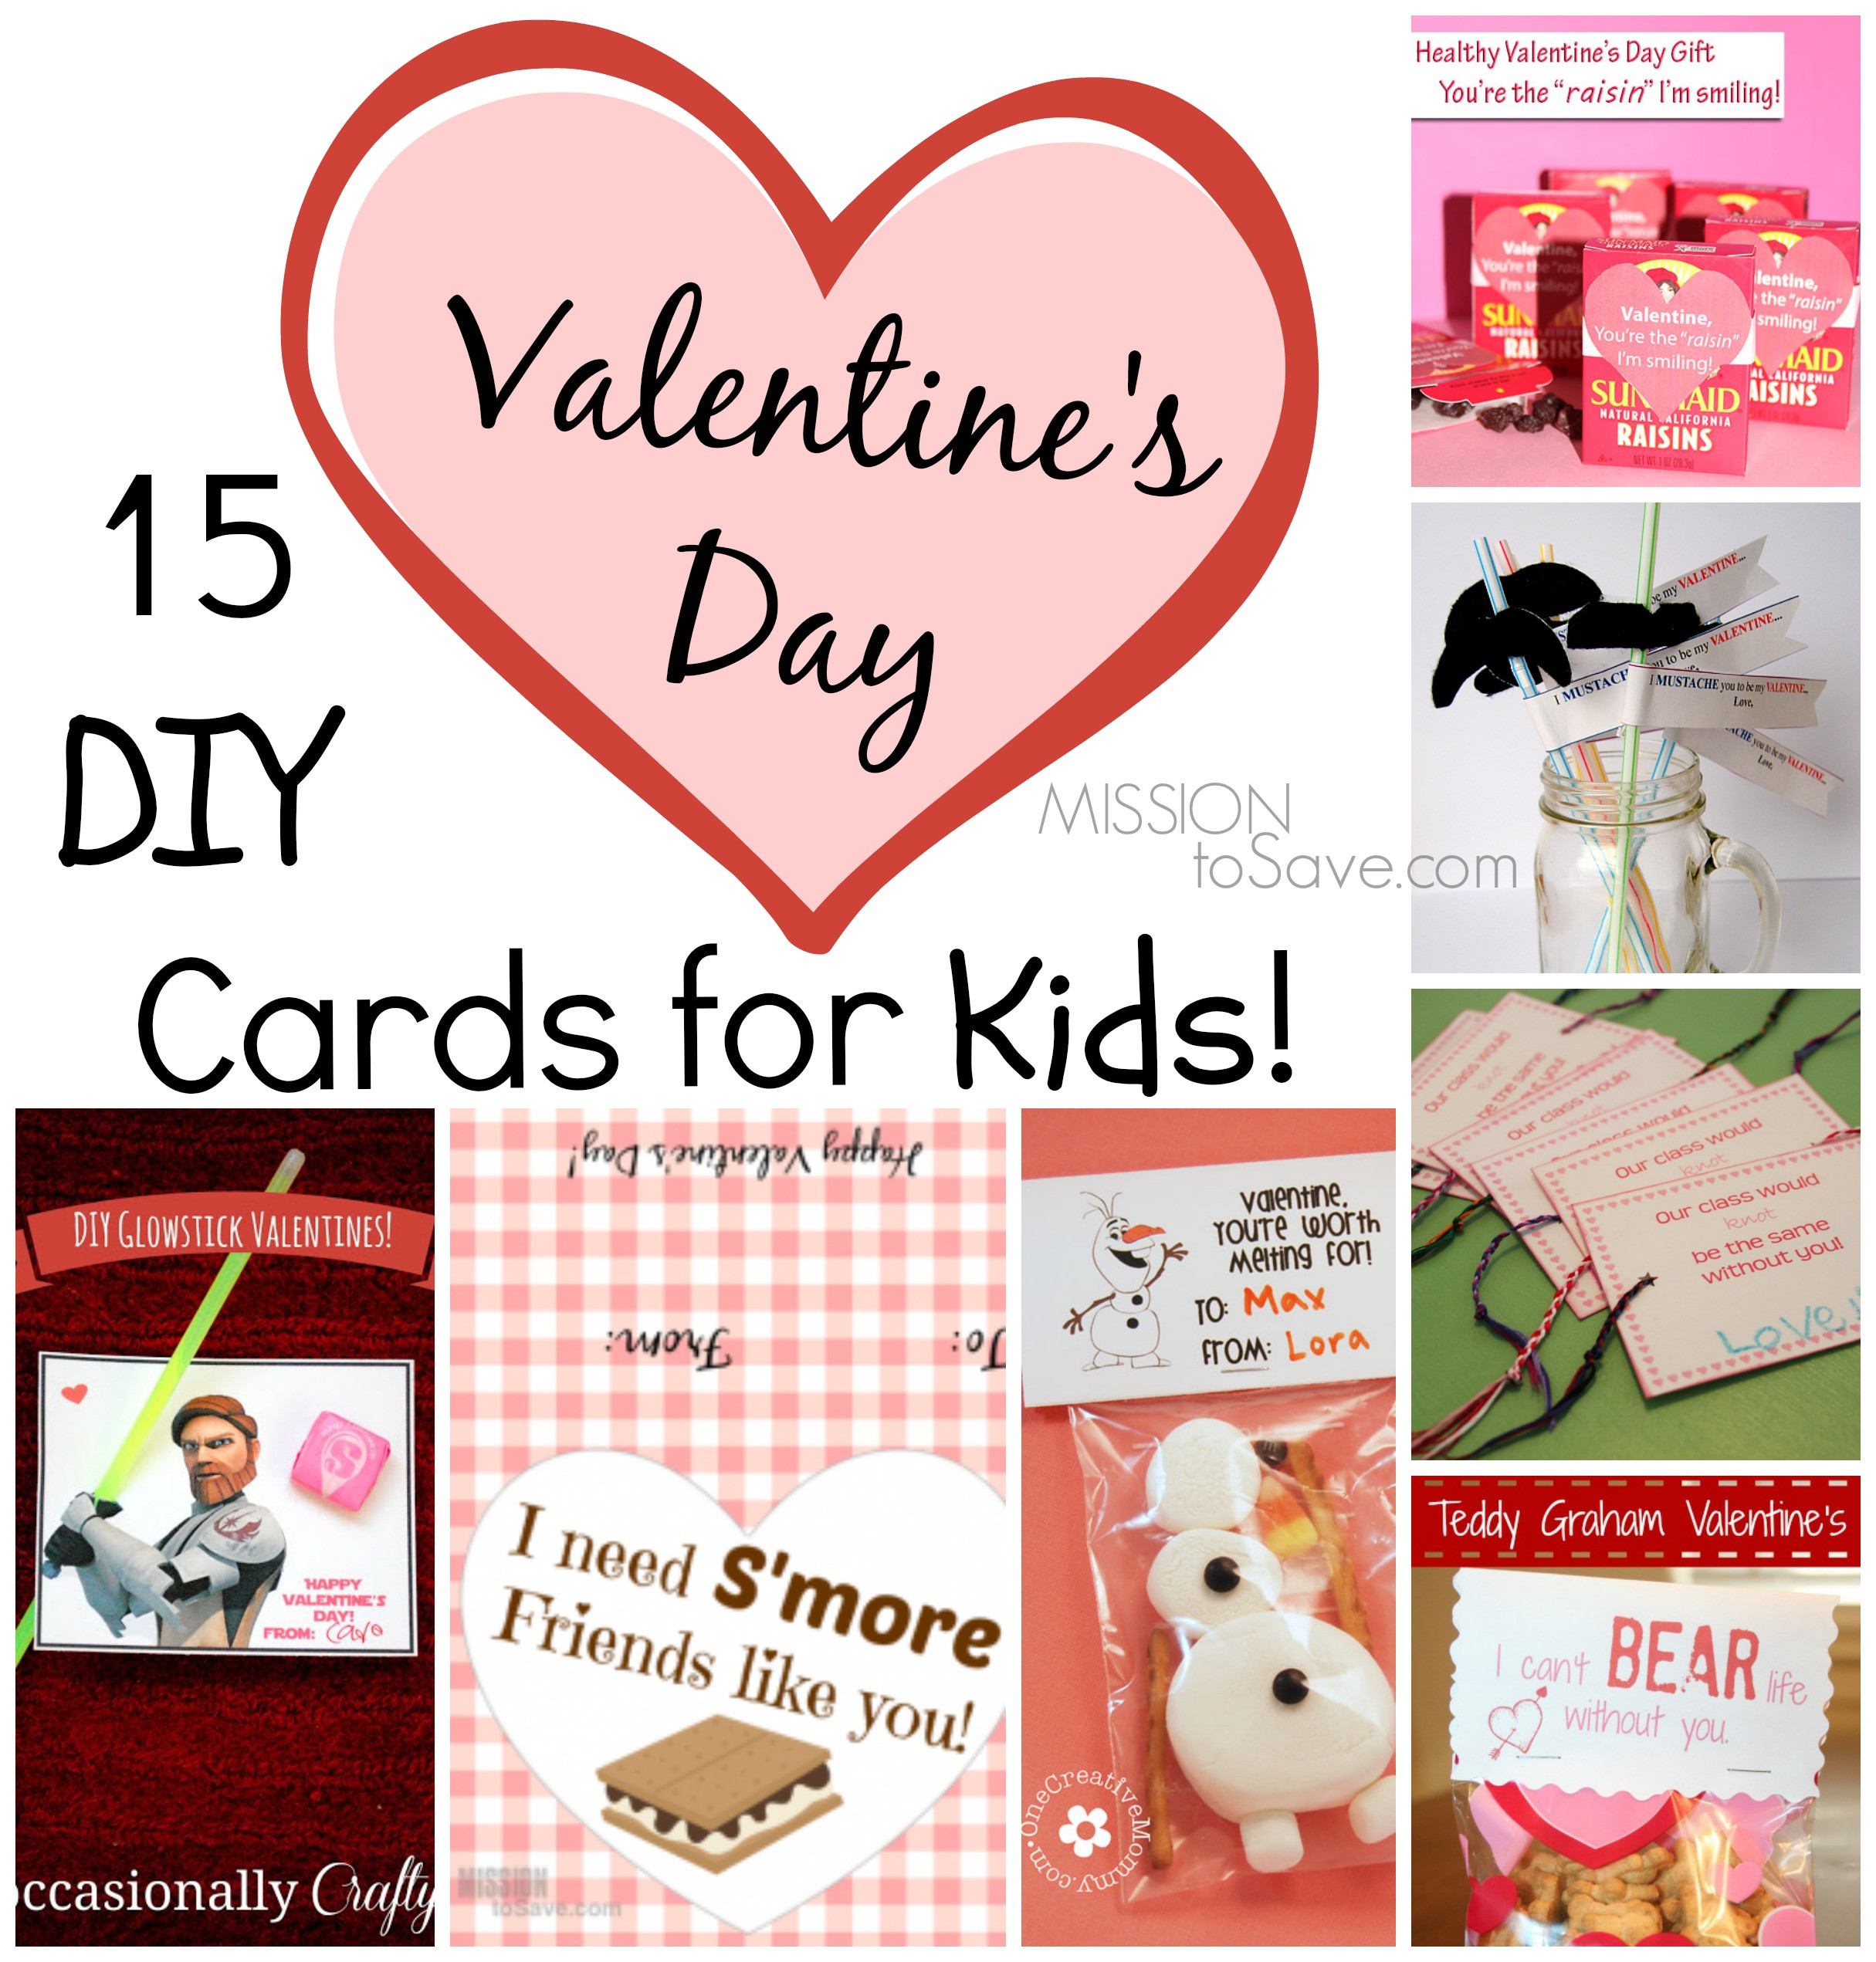 DIY Valentines Card For Kids
 15 DIY Valentine Day Cards for Kids Mission to Save